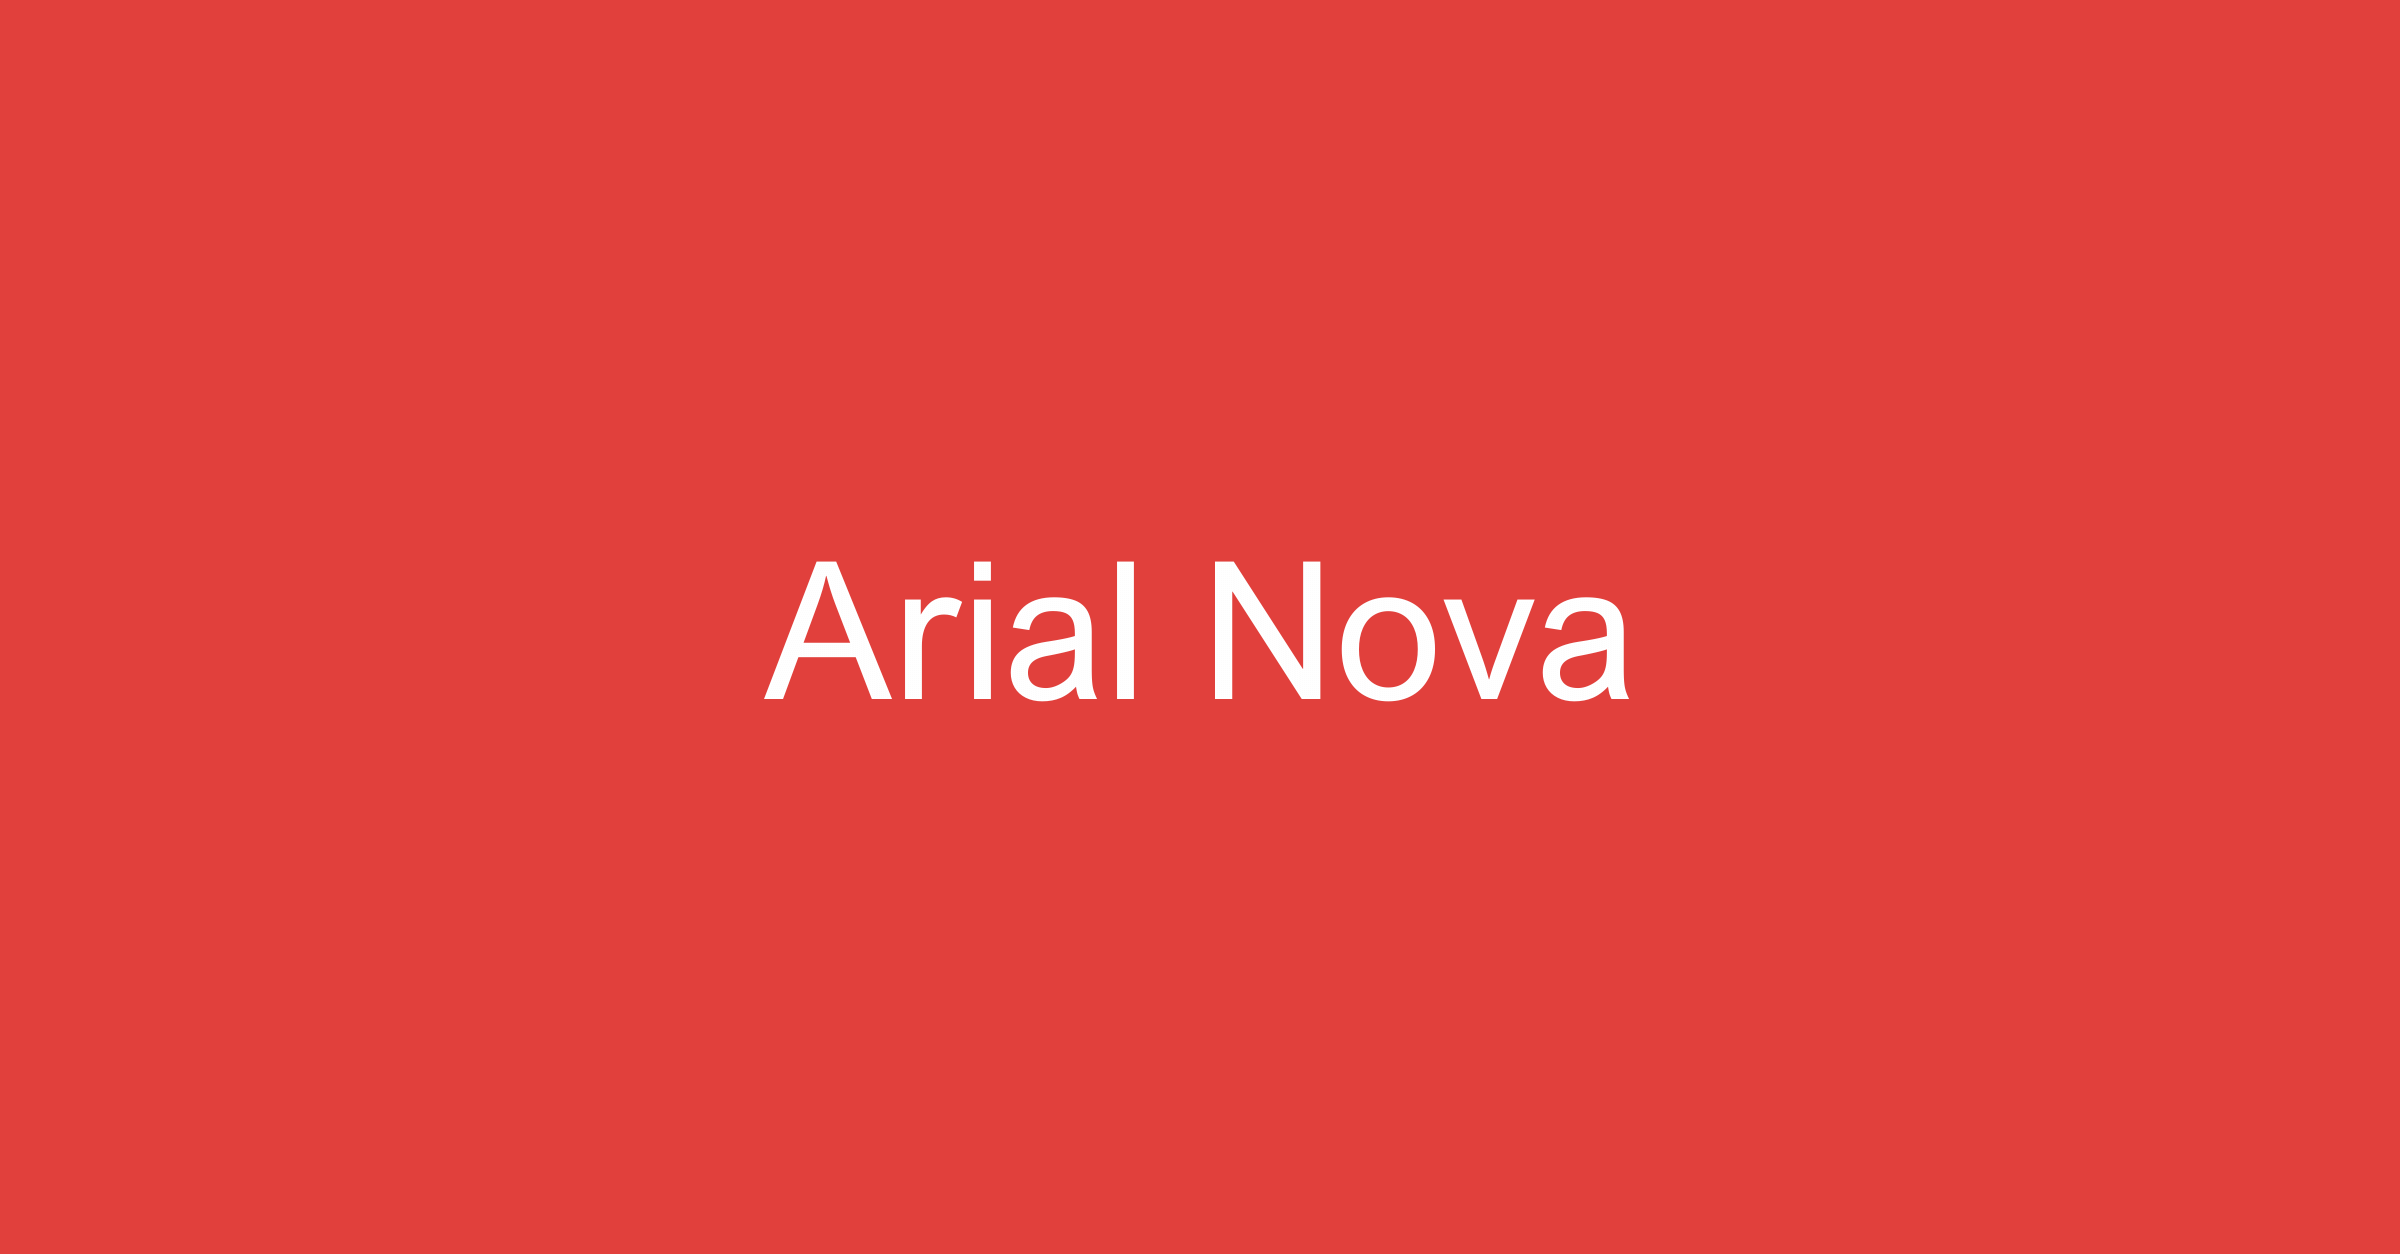 Arial Nova/Georgia Pro/Gill Sans Nova/Neue Haas Grotesk/Rockwell Nova/Verdana Pro。